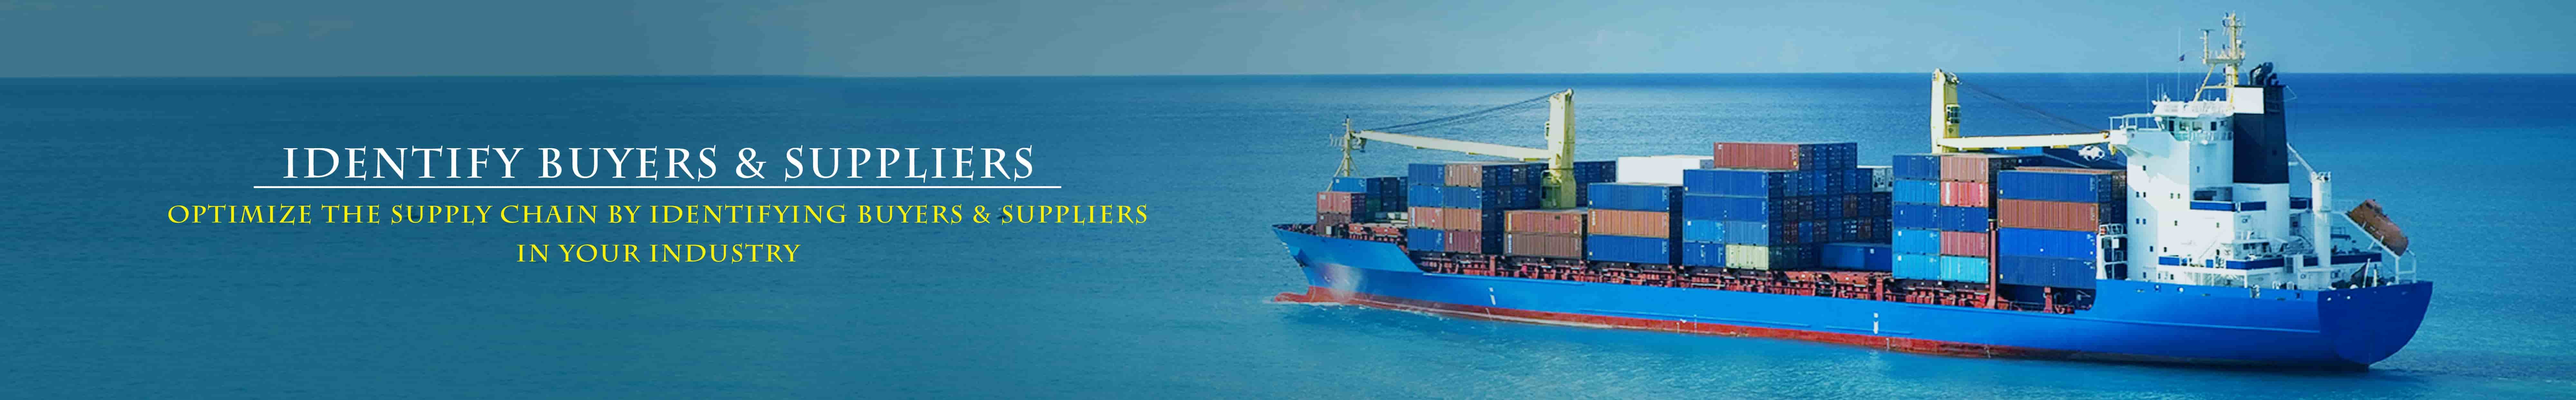 India Import World banner3